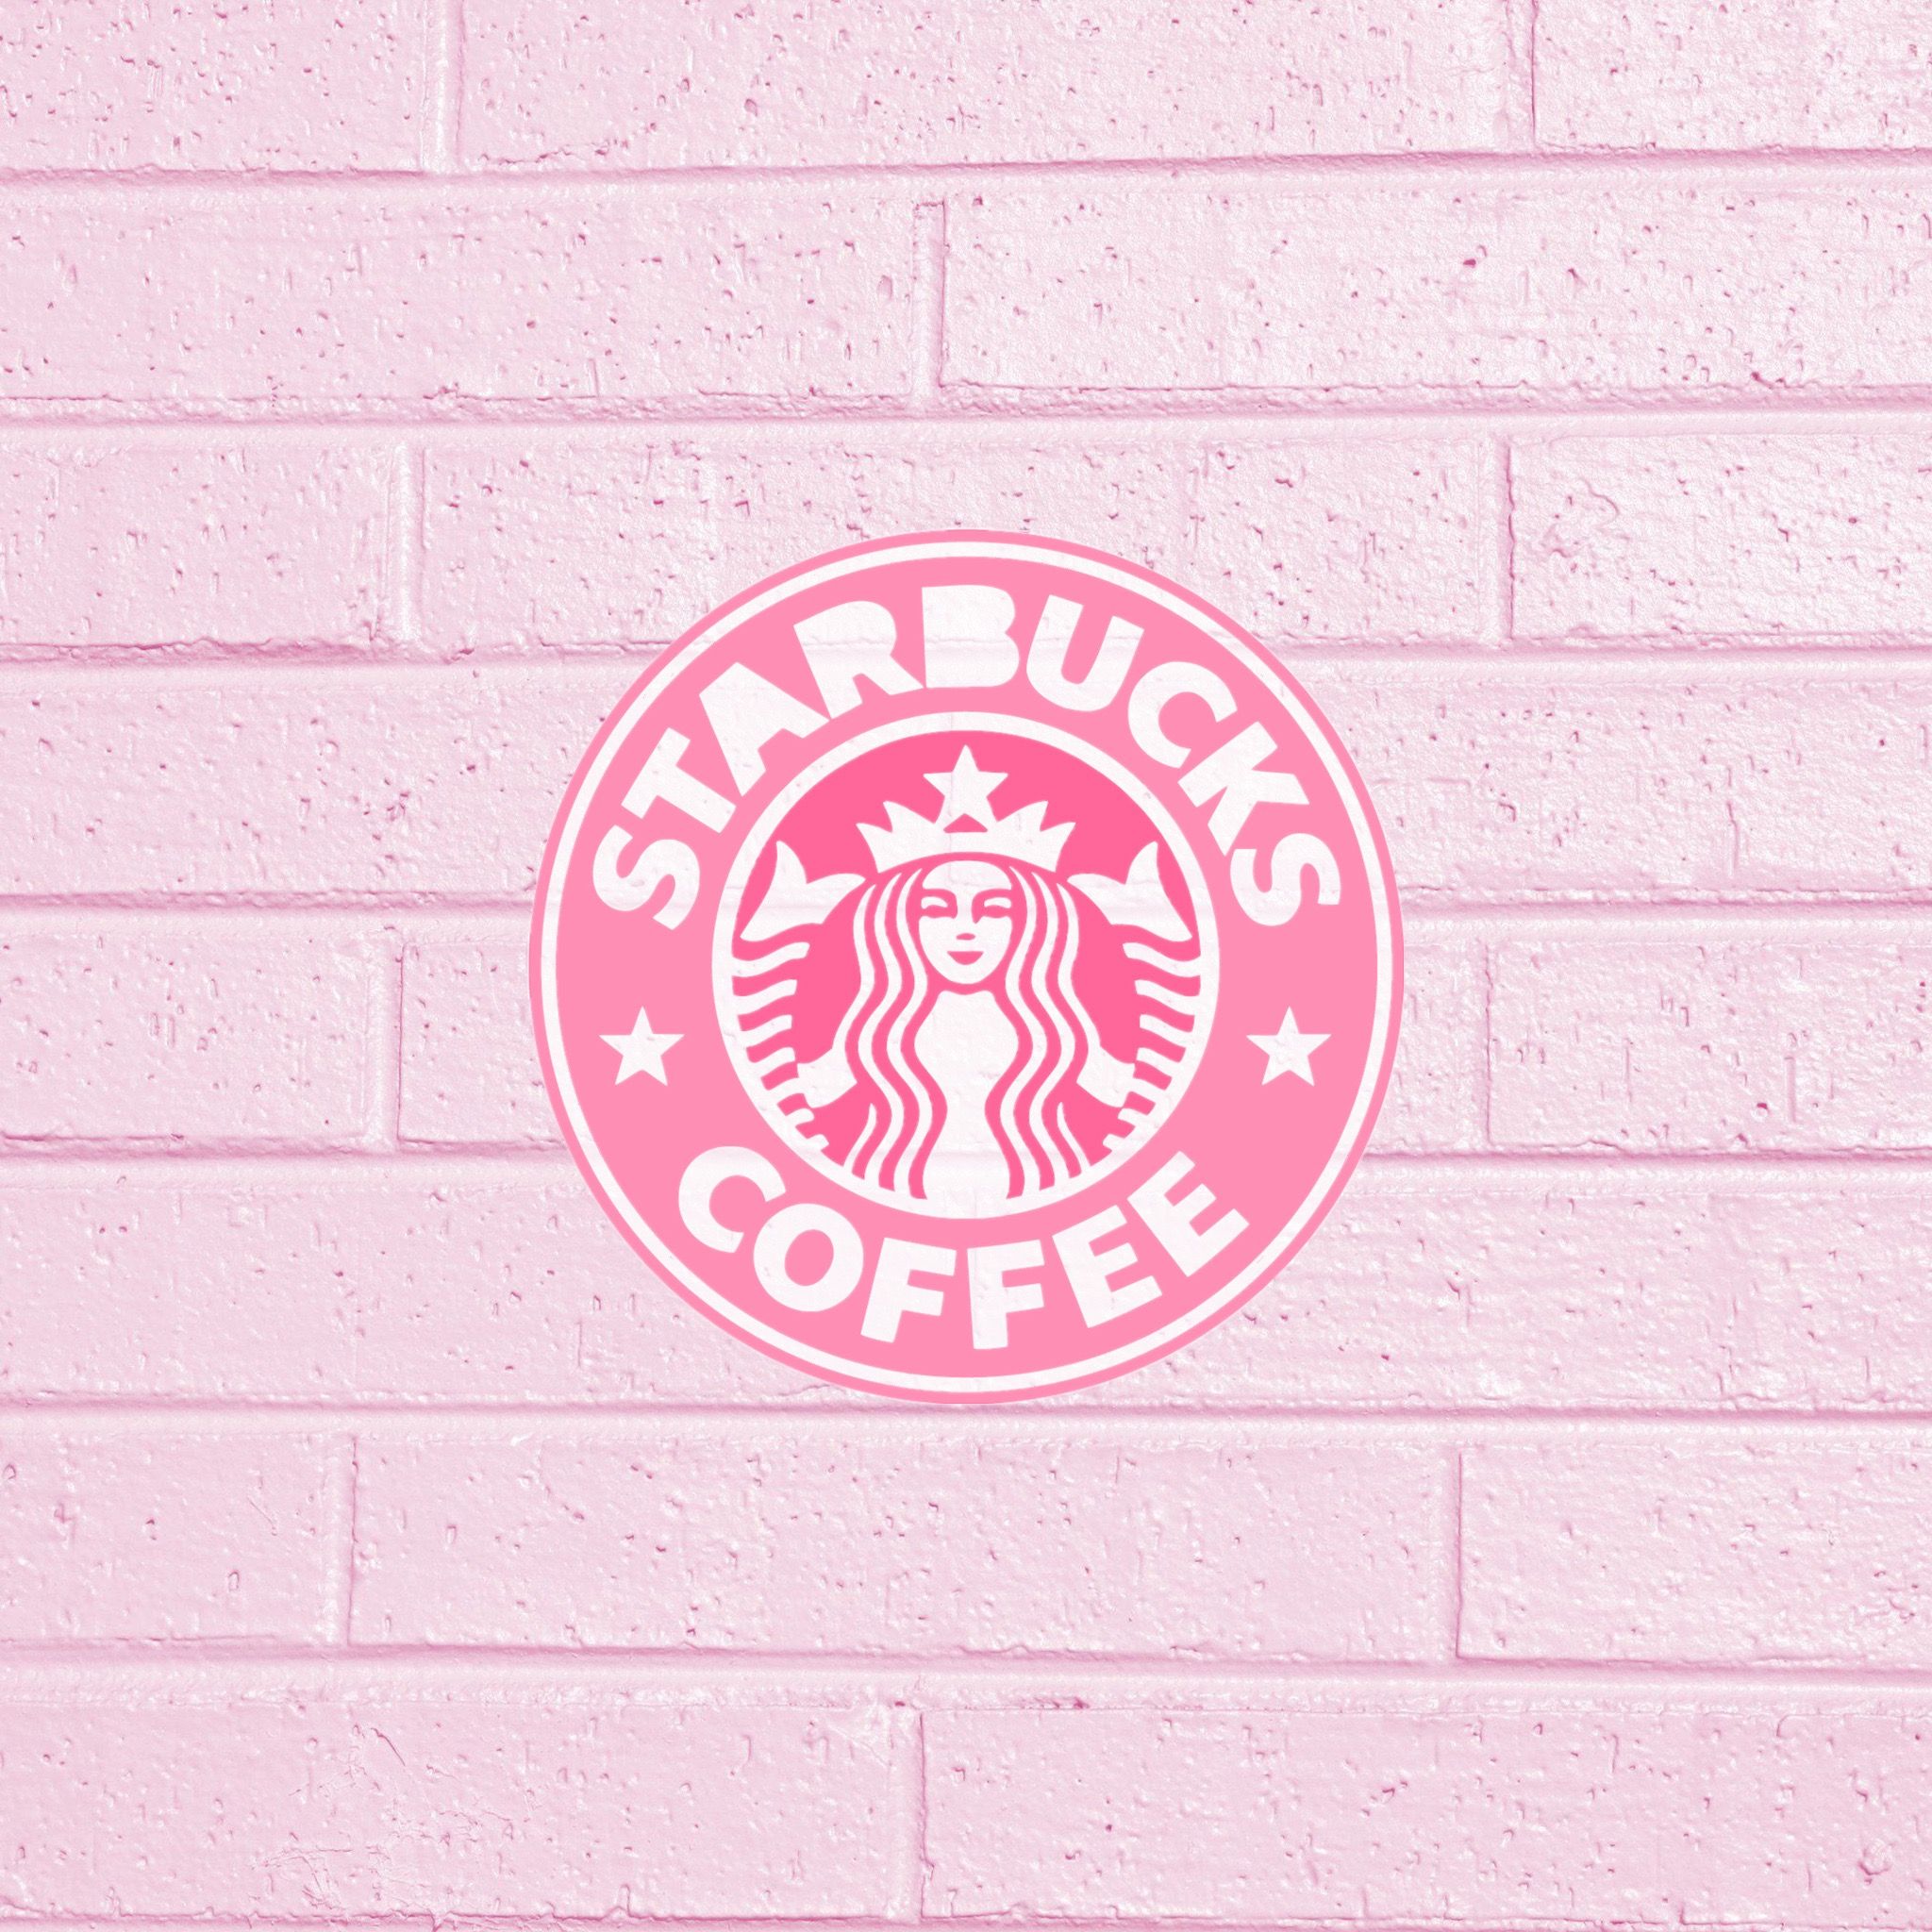 Girly Starbucks Wallpaper Free Girly Starbucks Background